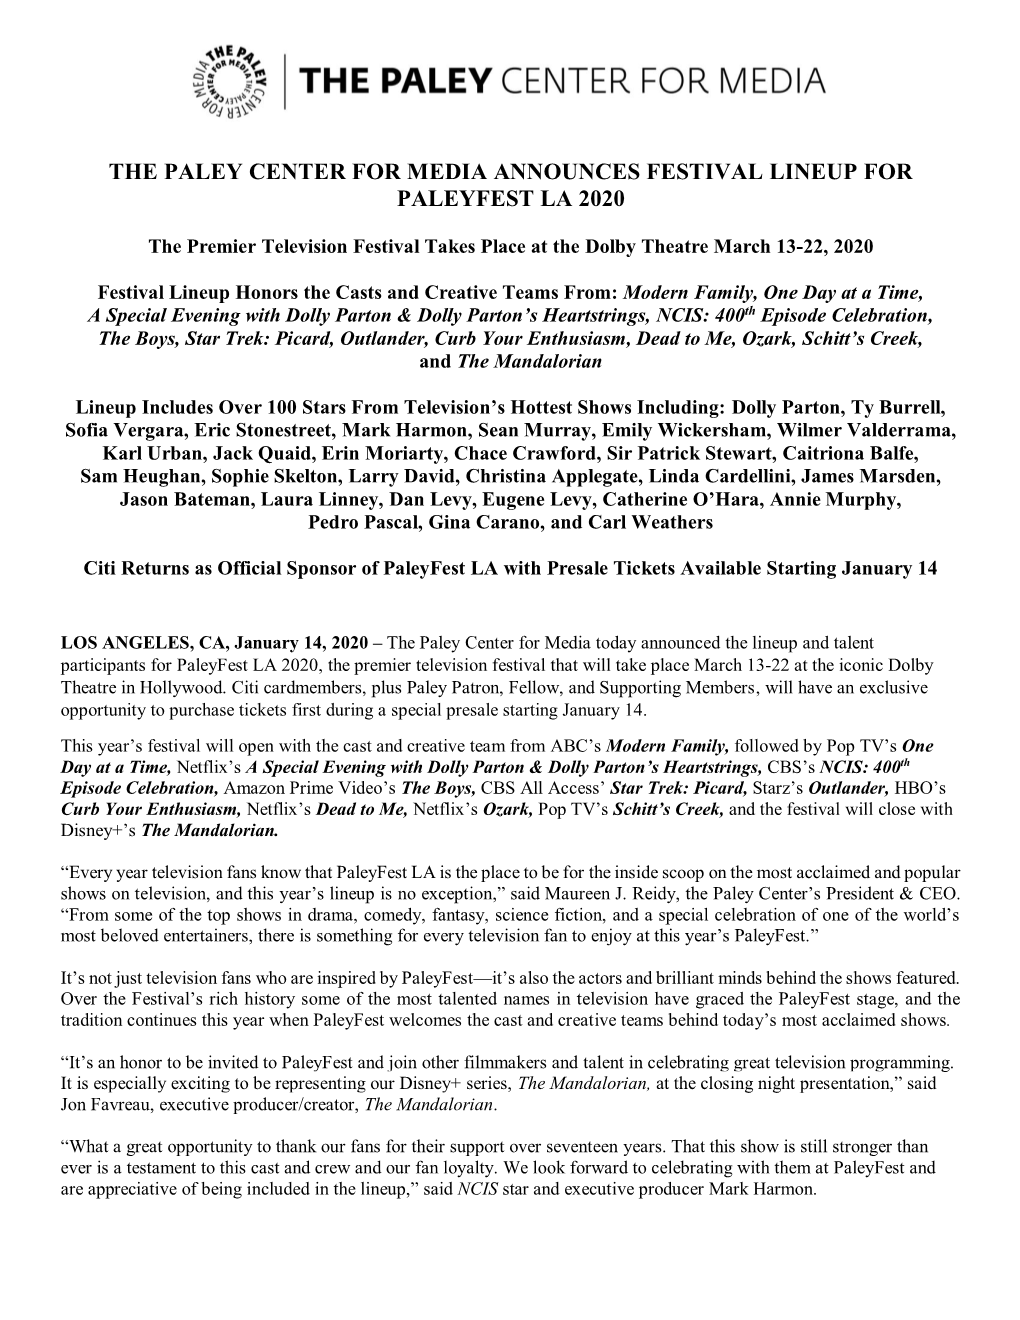 The Paley Center for Media Announces Festival Lineup for Paleyfest La 2020